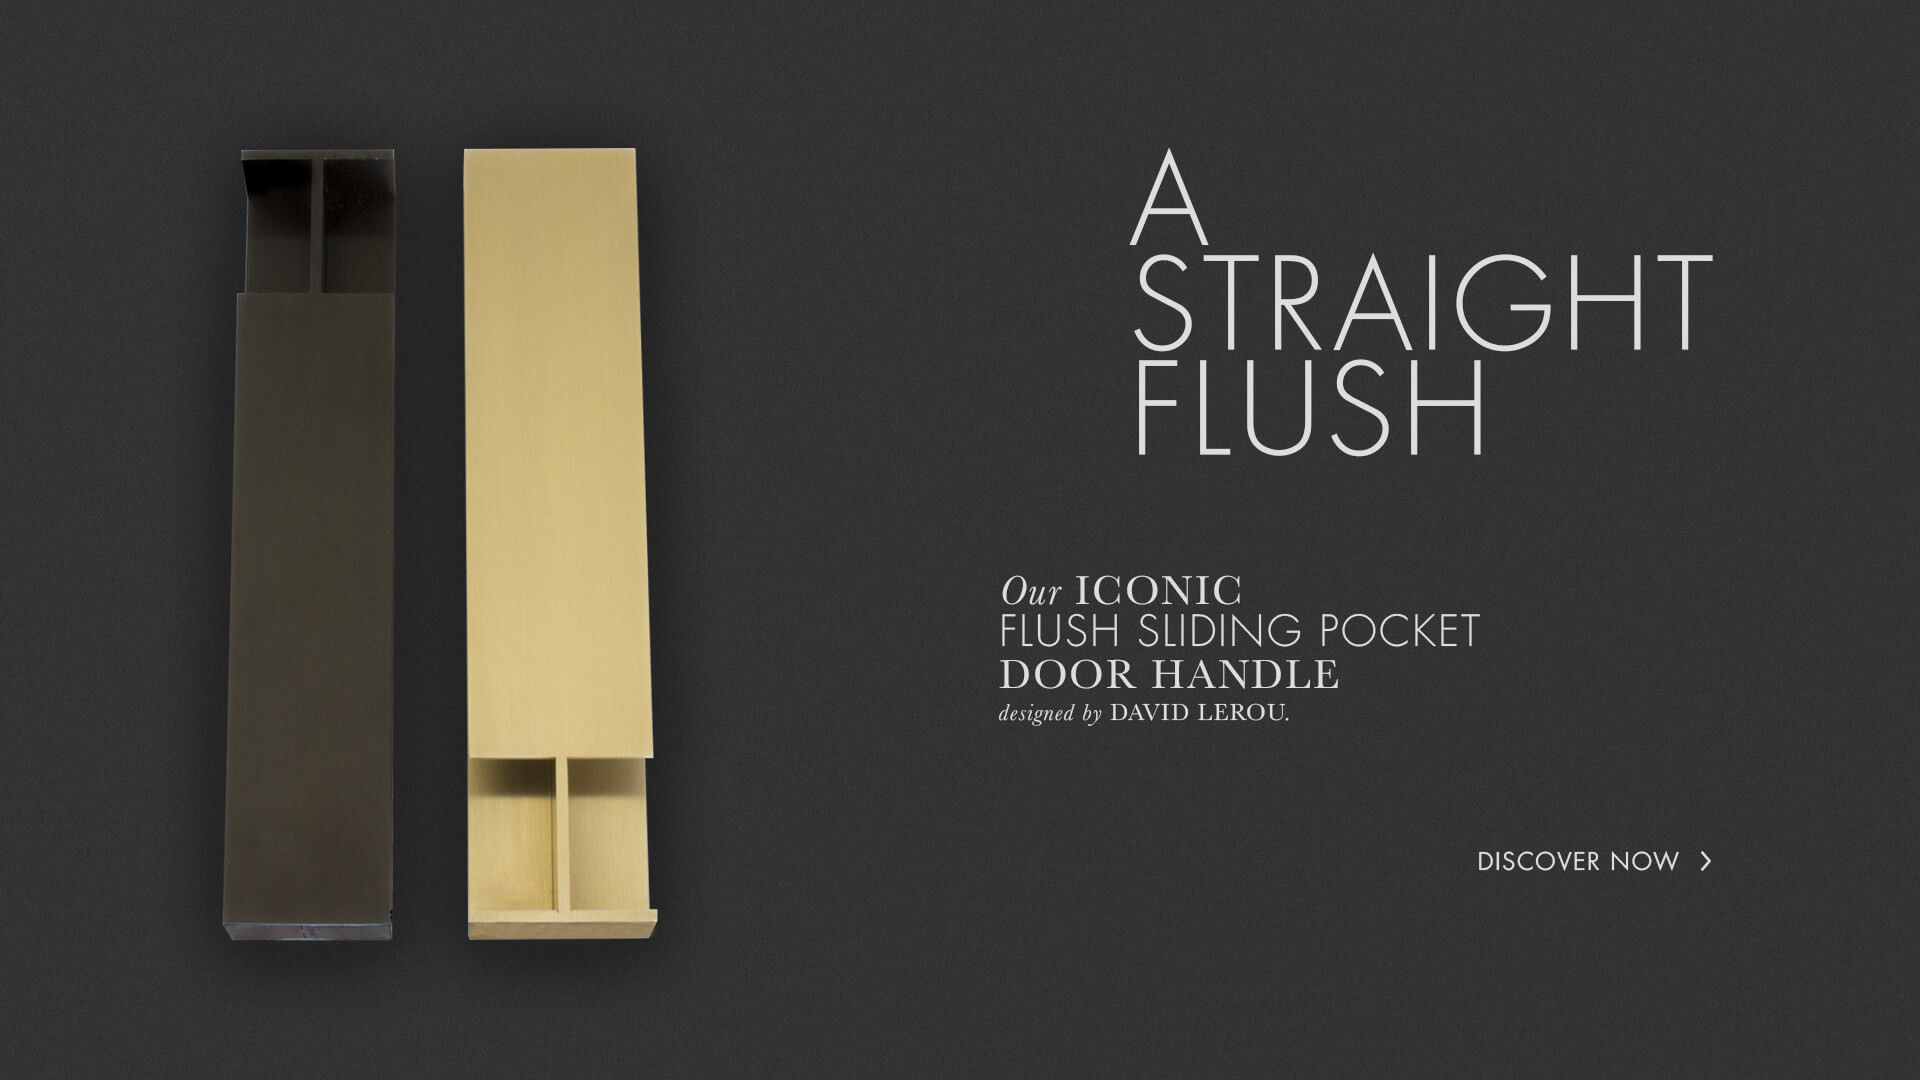 Our Iconic Flush Sliding Pocket Door Handle Designed by David Lerou.